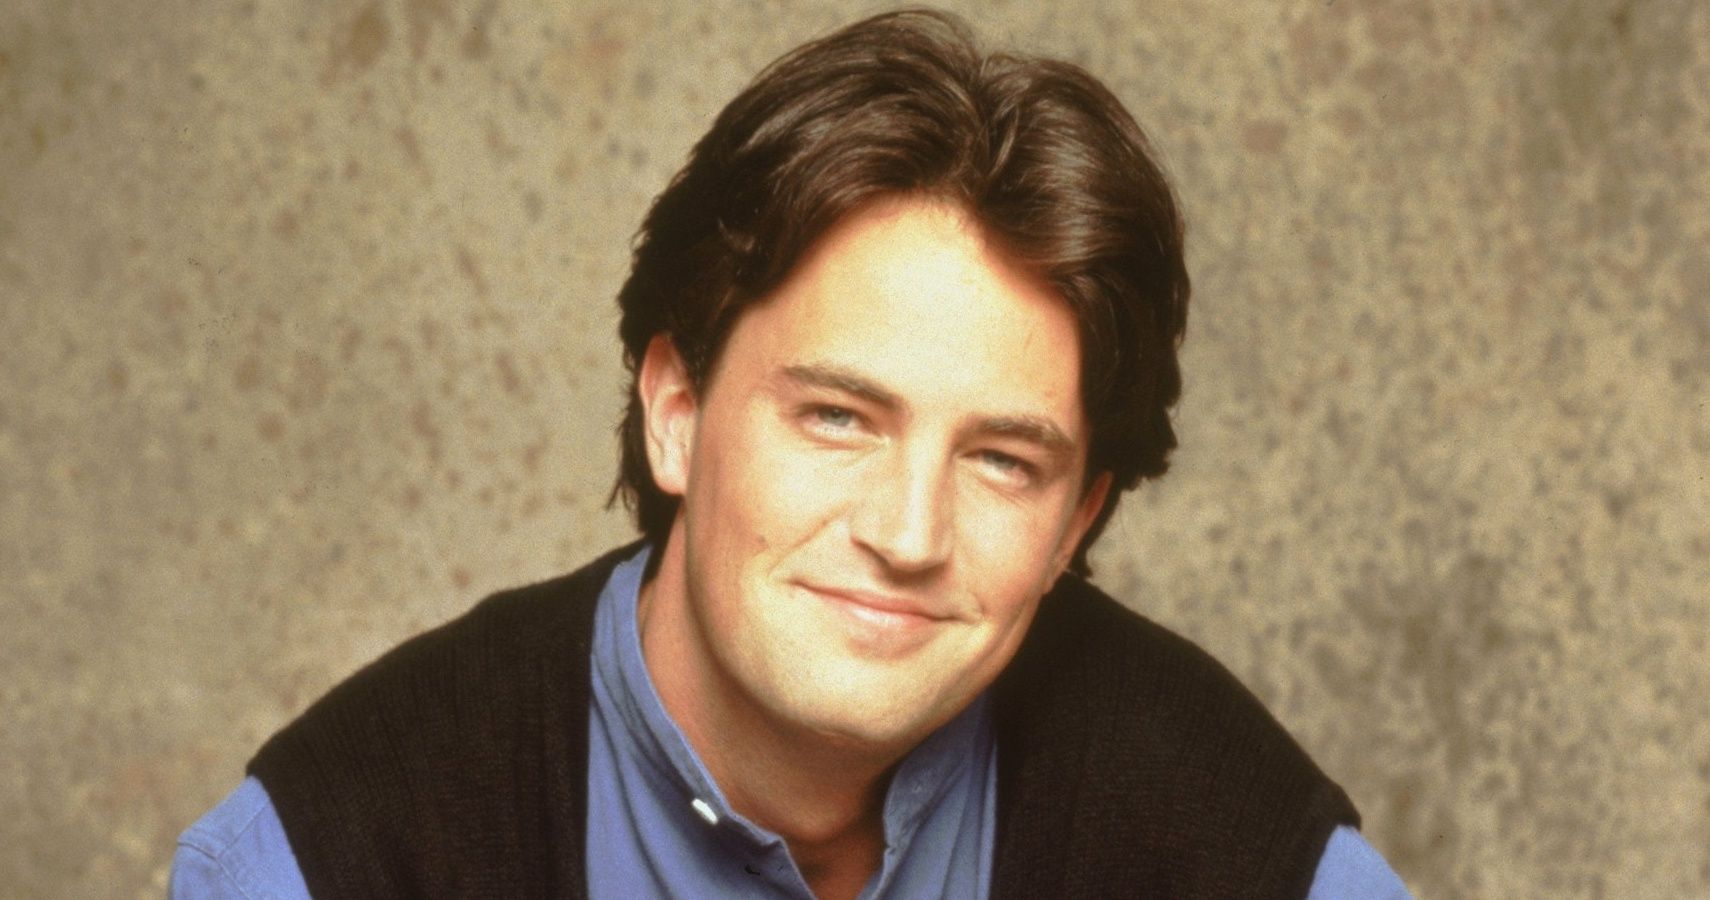 Chandler
